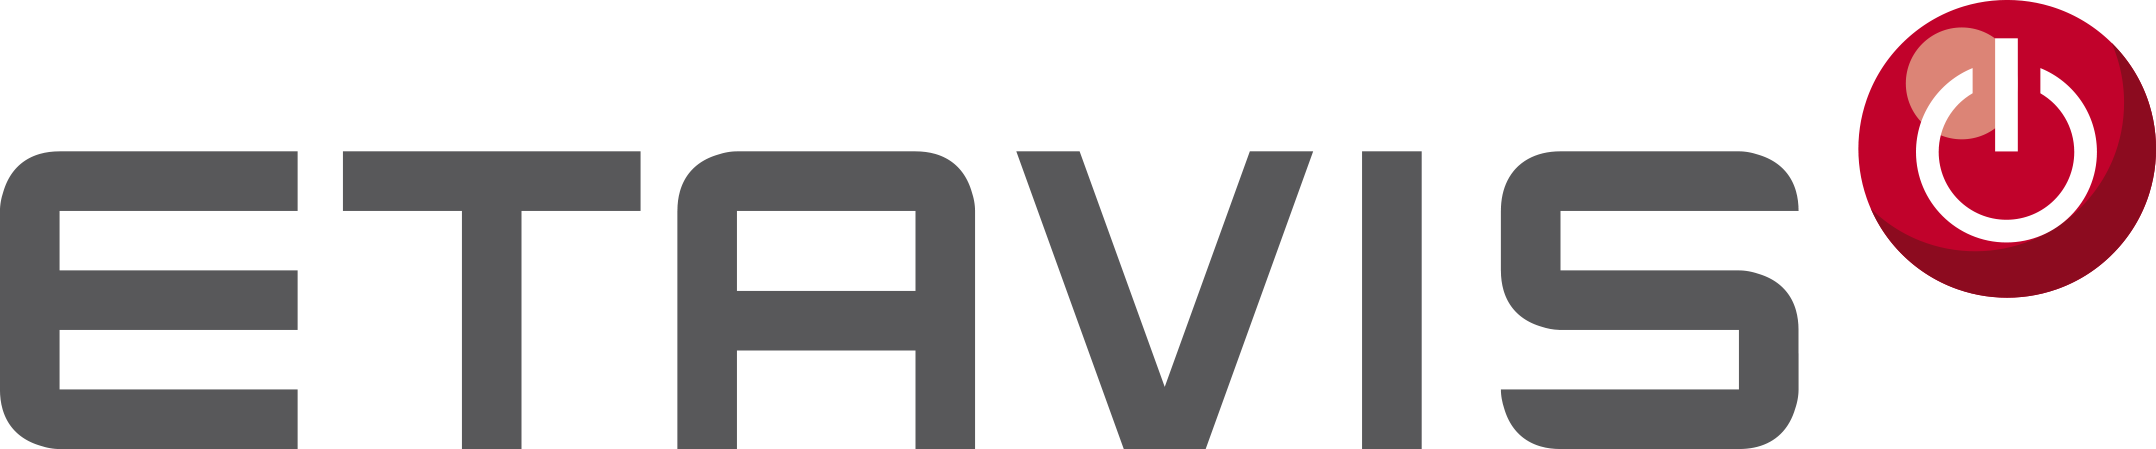 Etavis Logo 1